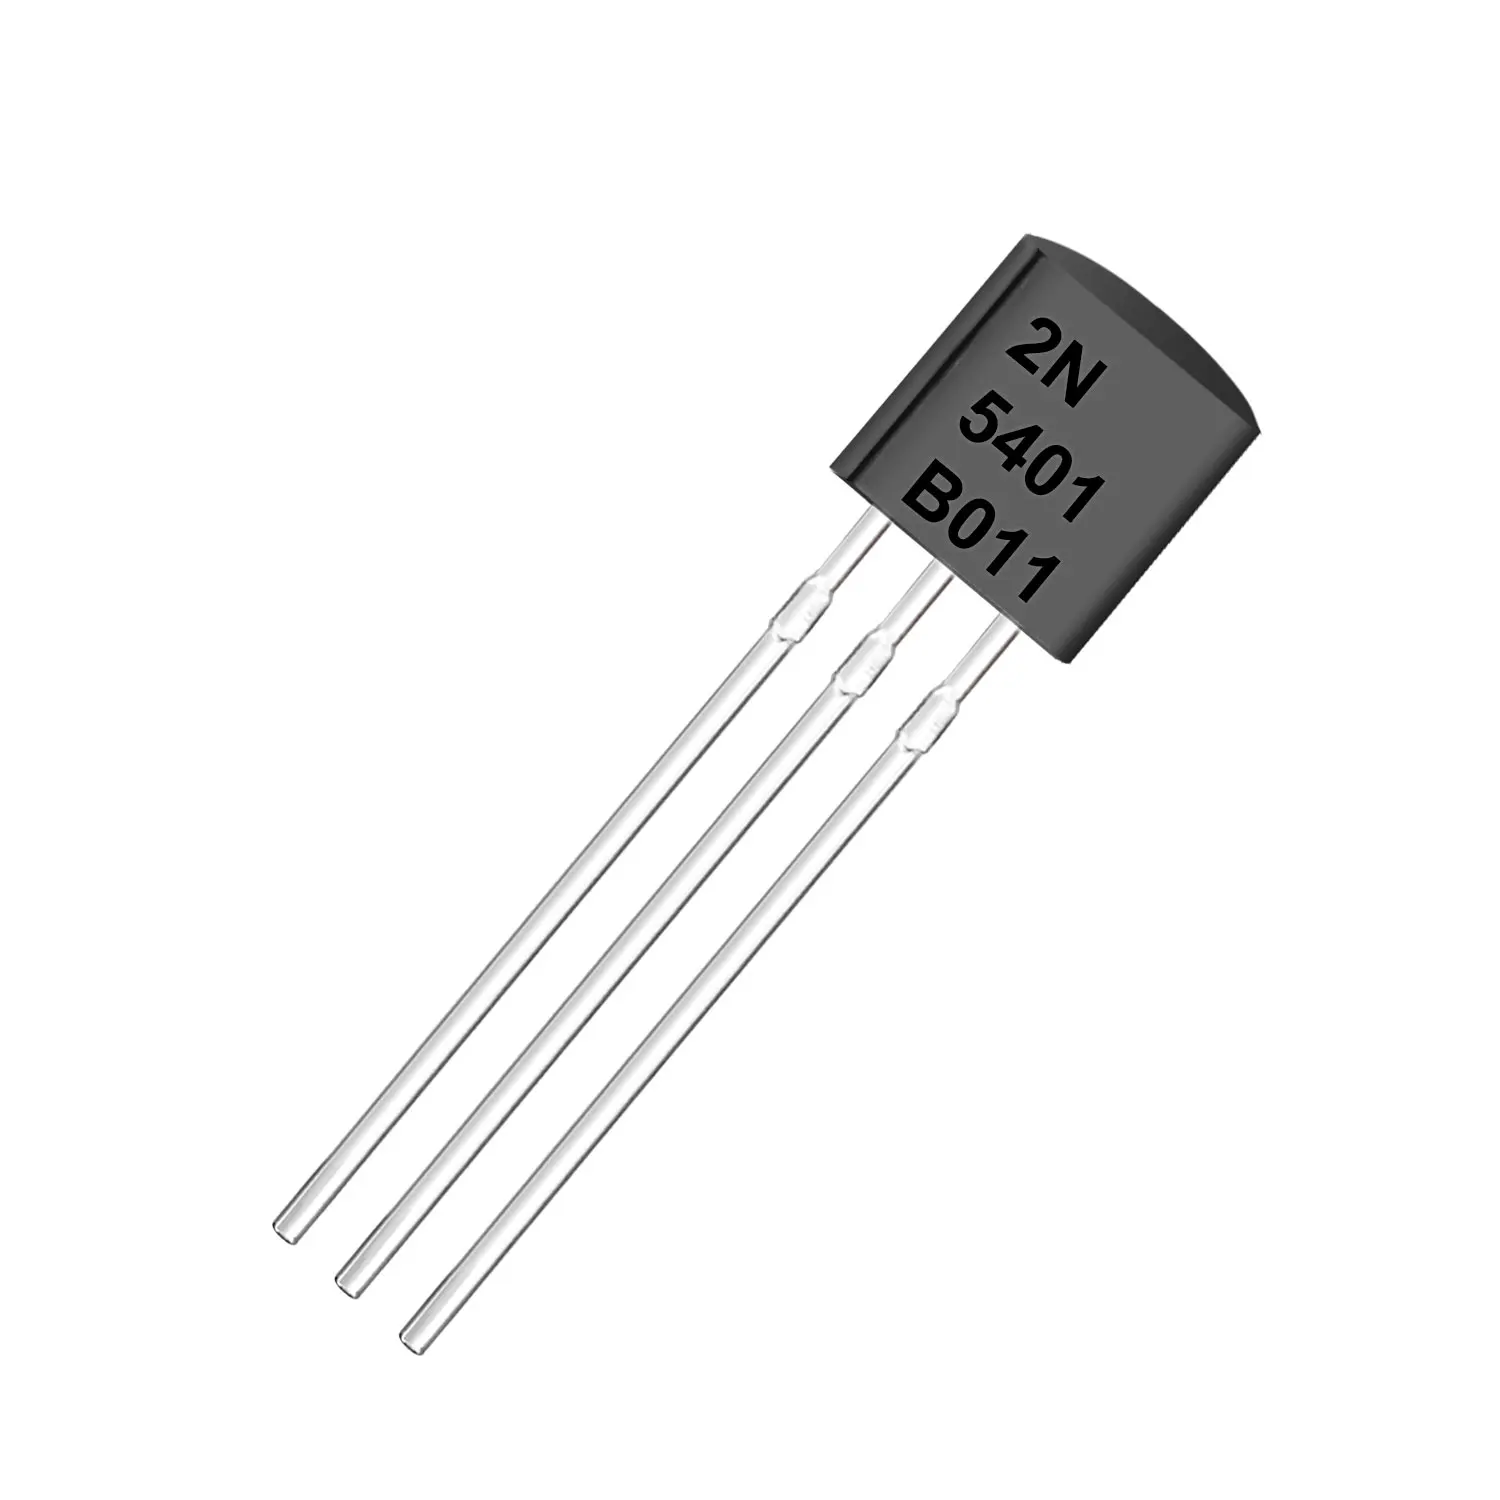 New 100 X 2N5401 PNP General Purpose Transistor TO-92